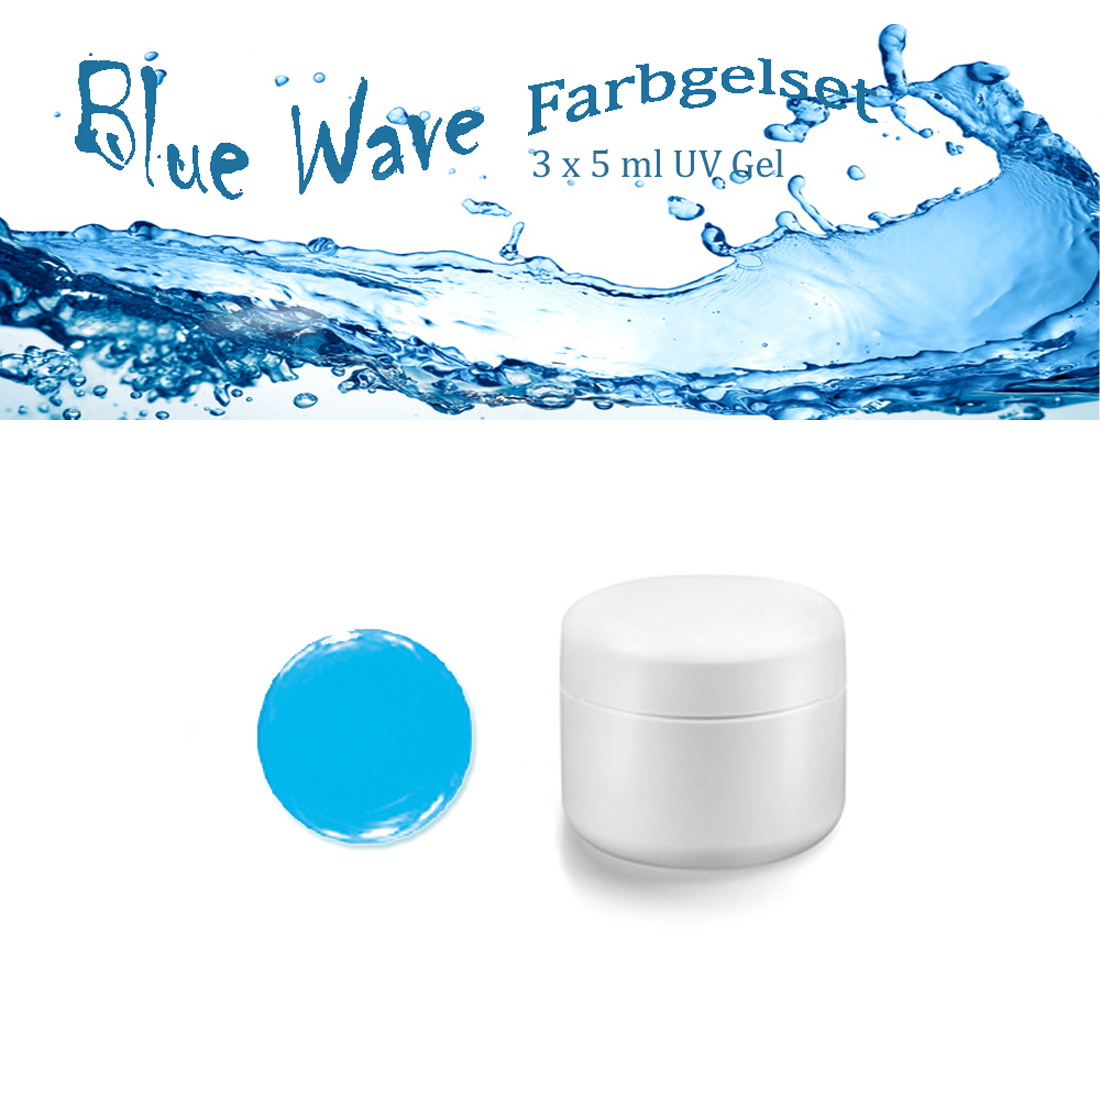 BLUE WAVE Farbgelset 3 x 5 ml